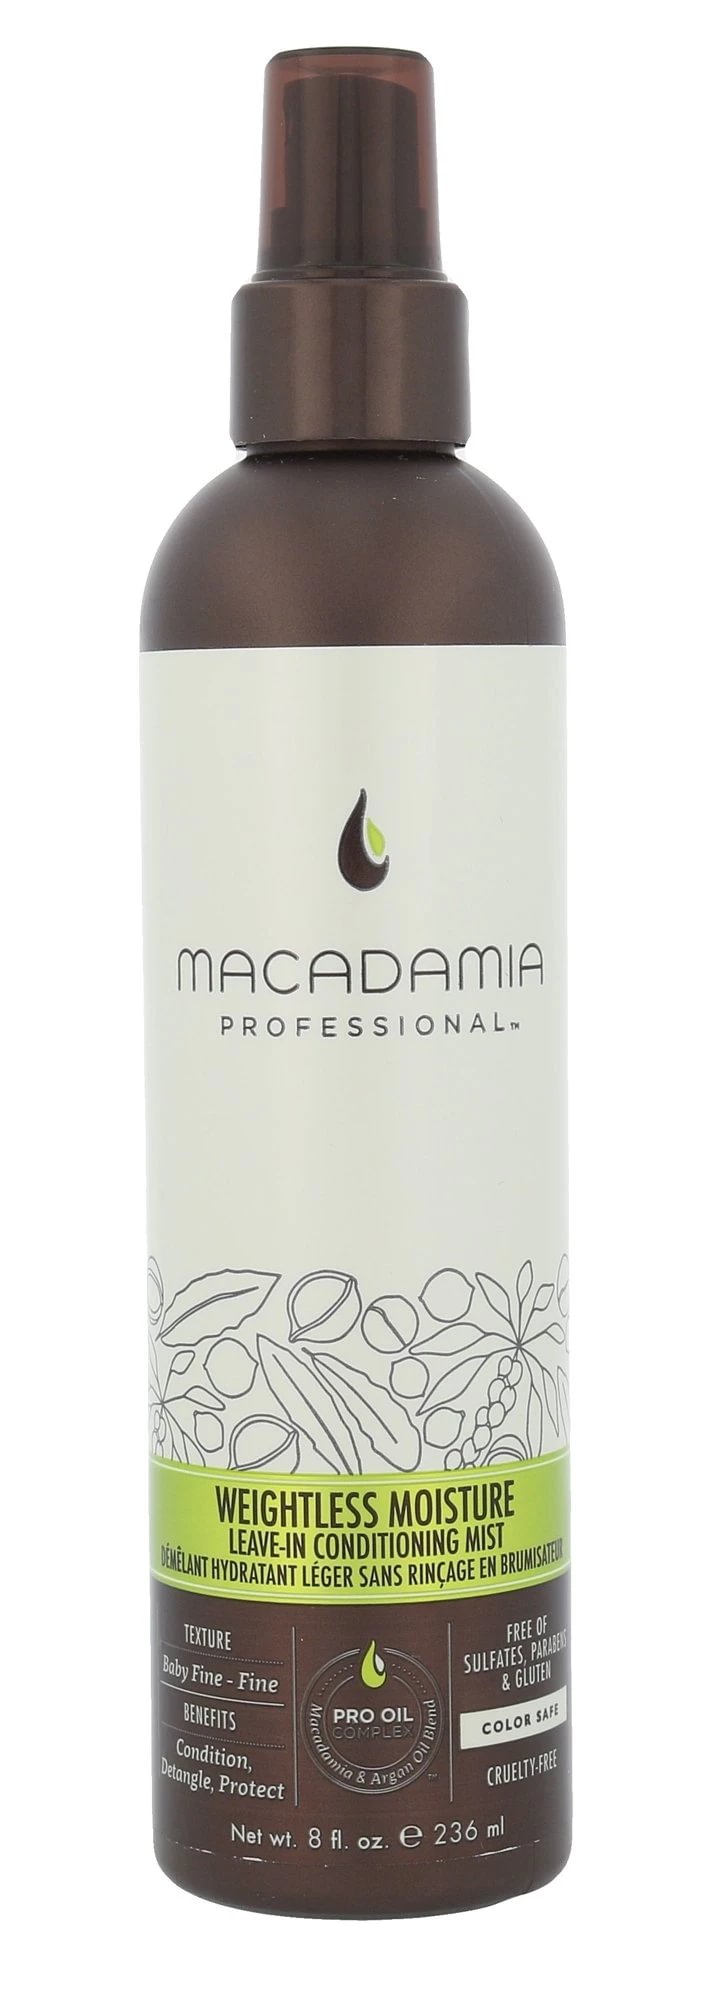 Macadamia Weightless Moisture Conditioning plaukų dulksna 236 ml